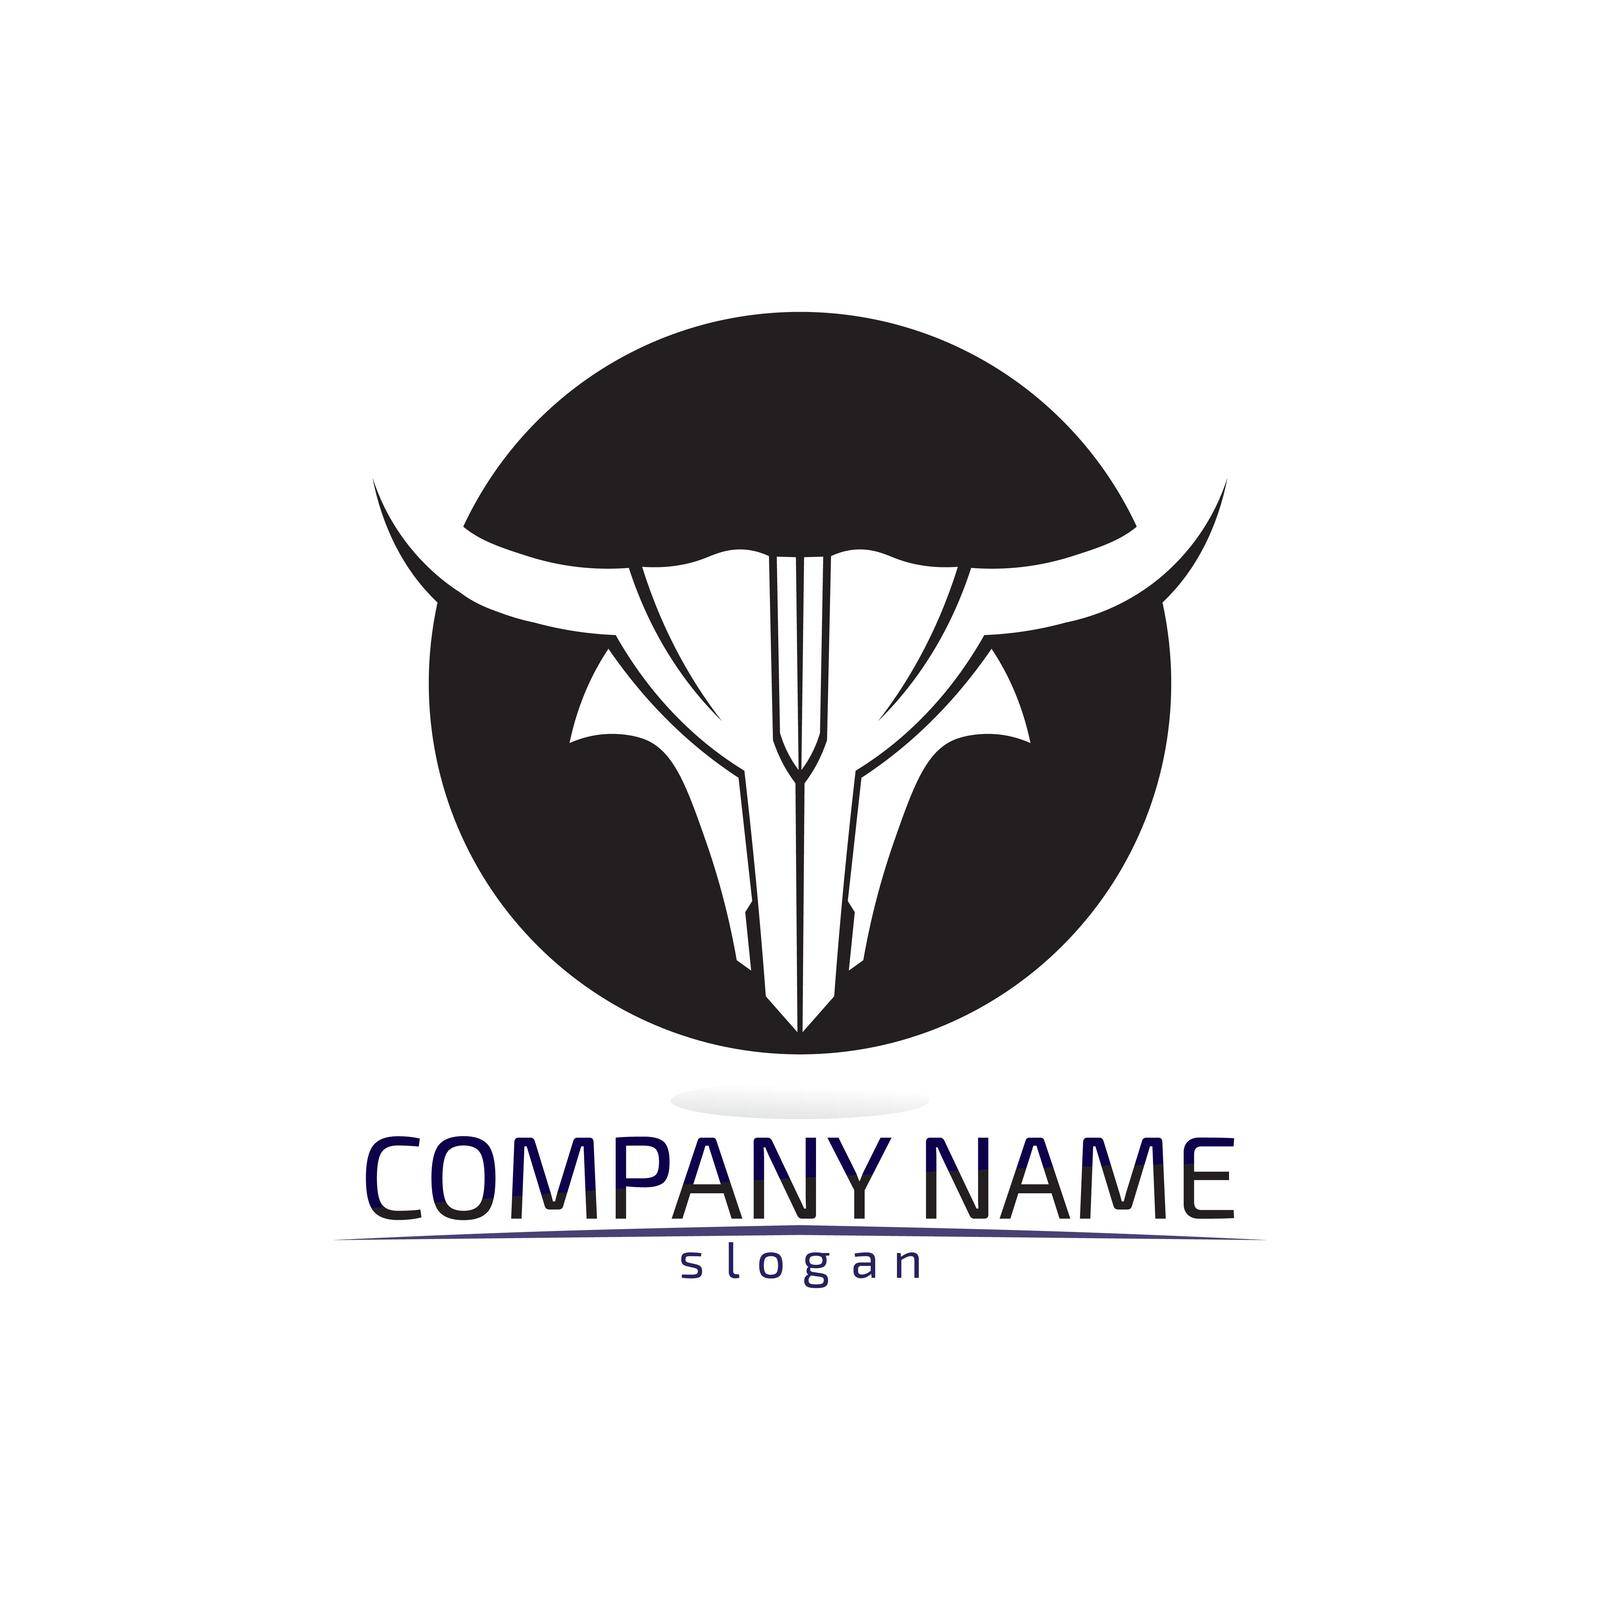 Bull horn logo and symbols template icons app vector by Anggasaputro